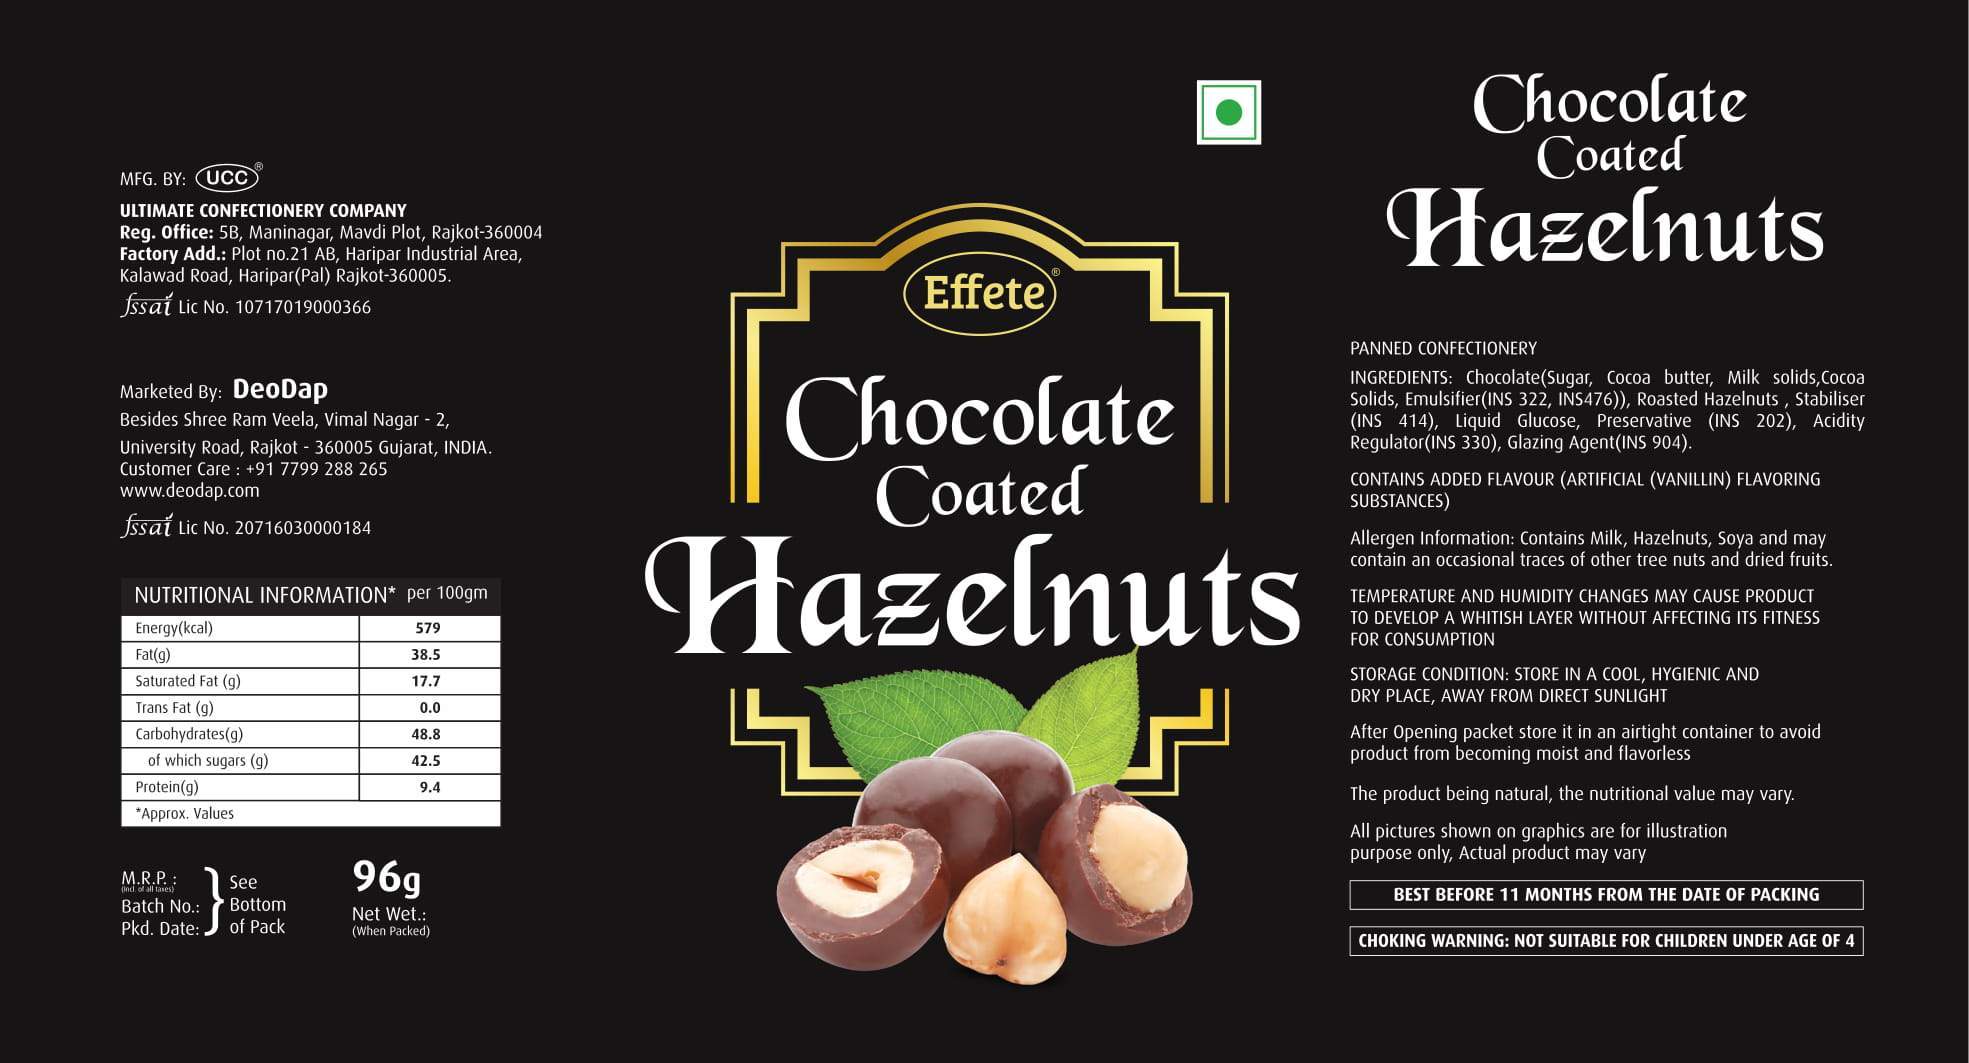 effete-hazelnuts-chocolate-96-gms